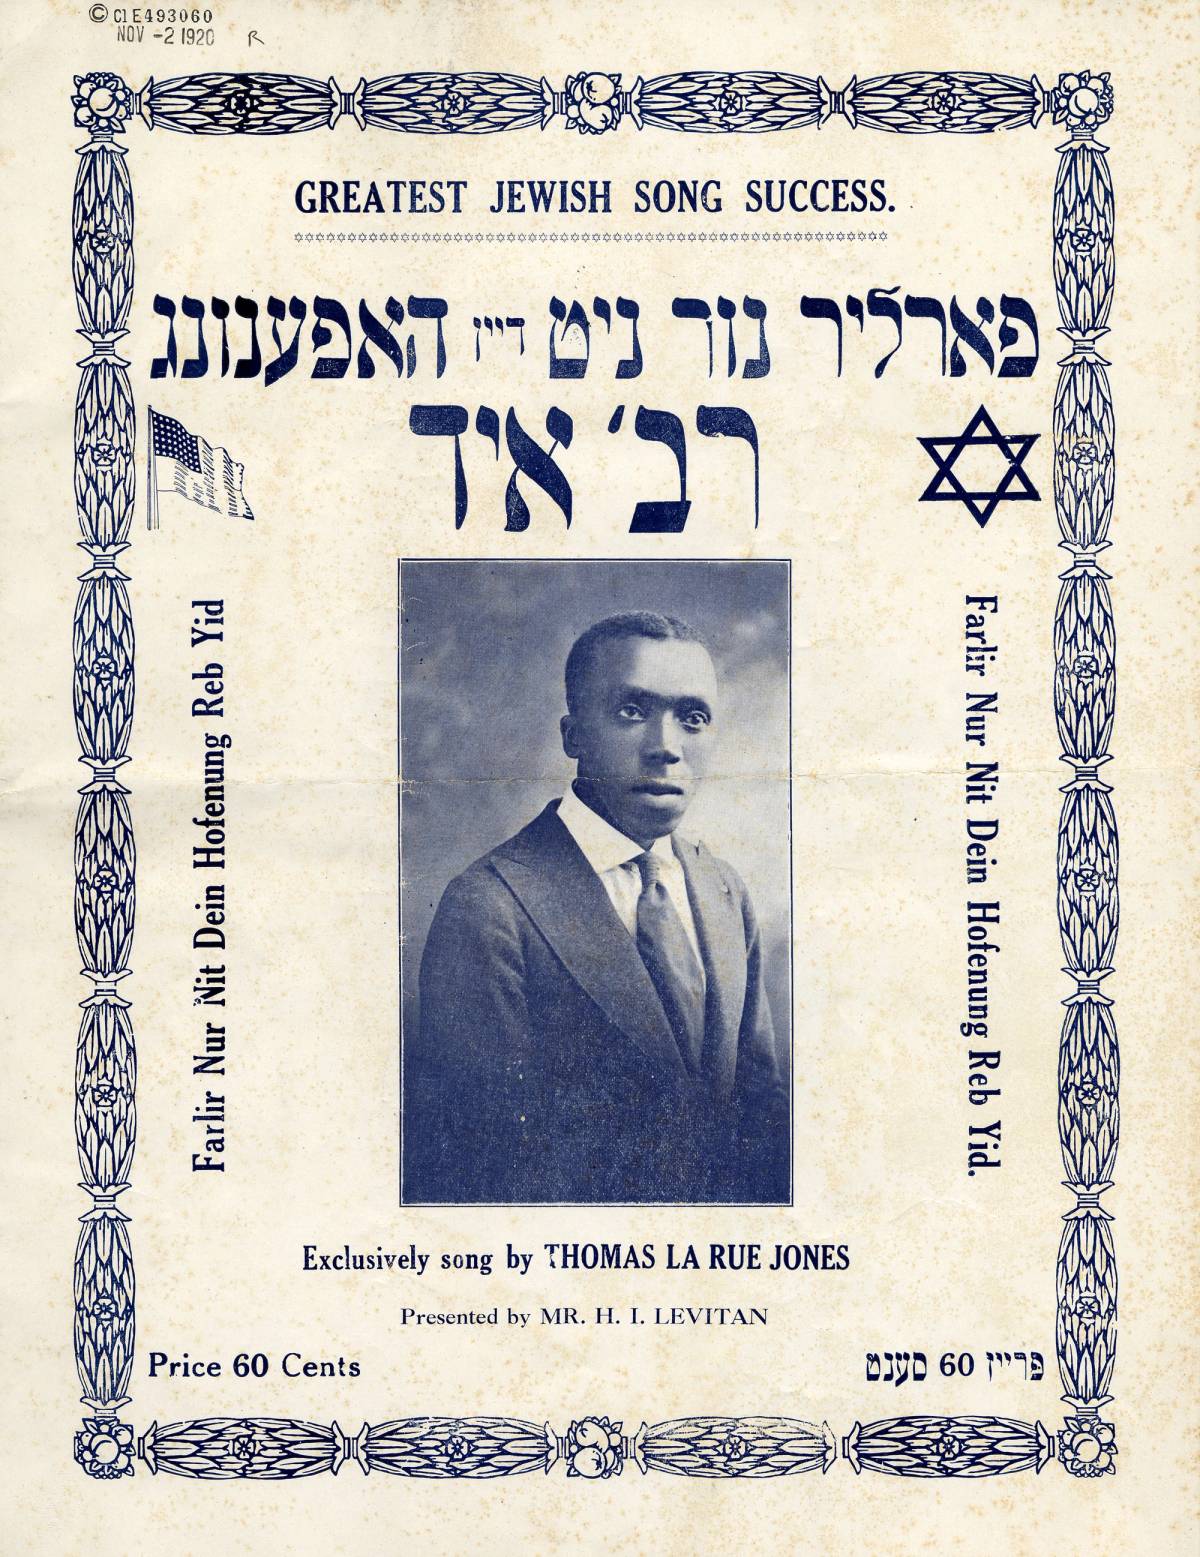 Thomas LaRue Jones' portrait on the cover for 'Ferlir nur nit dein hofnung reb Yid,' 1920